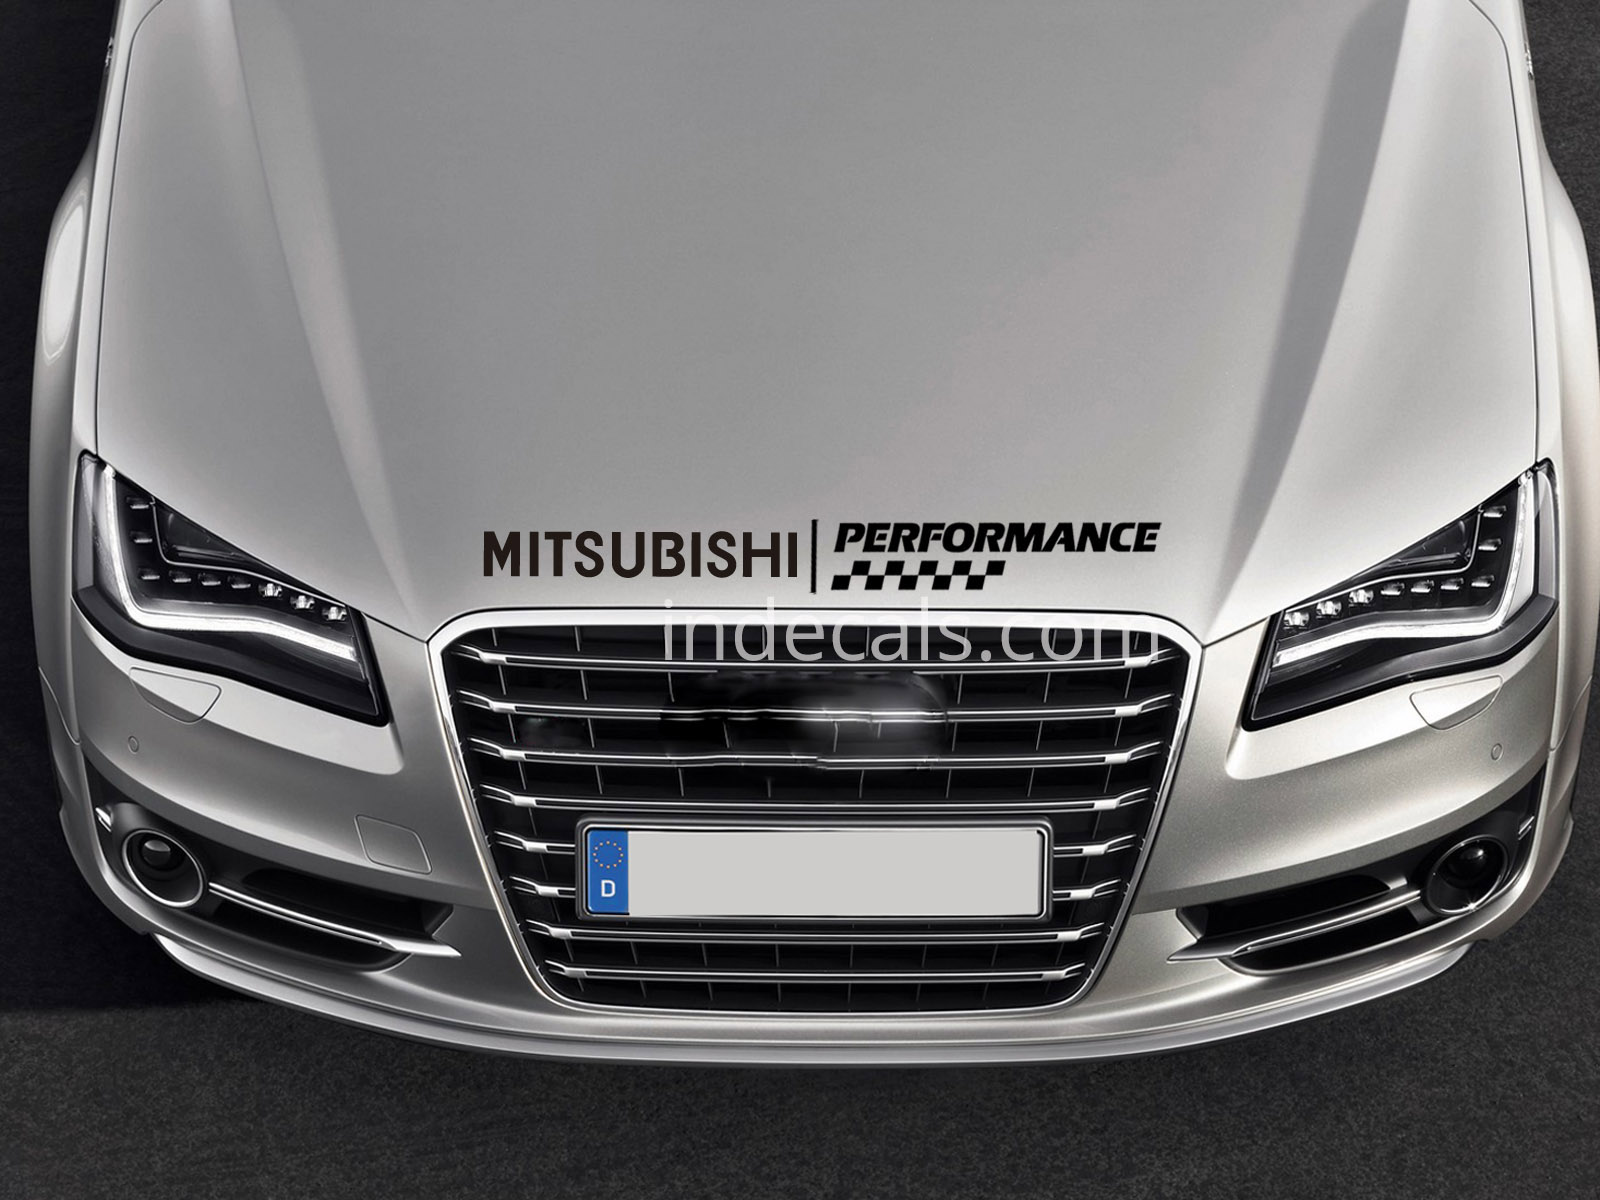 1 x Mitsubishi Performance Sticker for Bonnet - Black